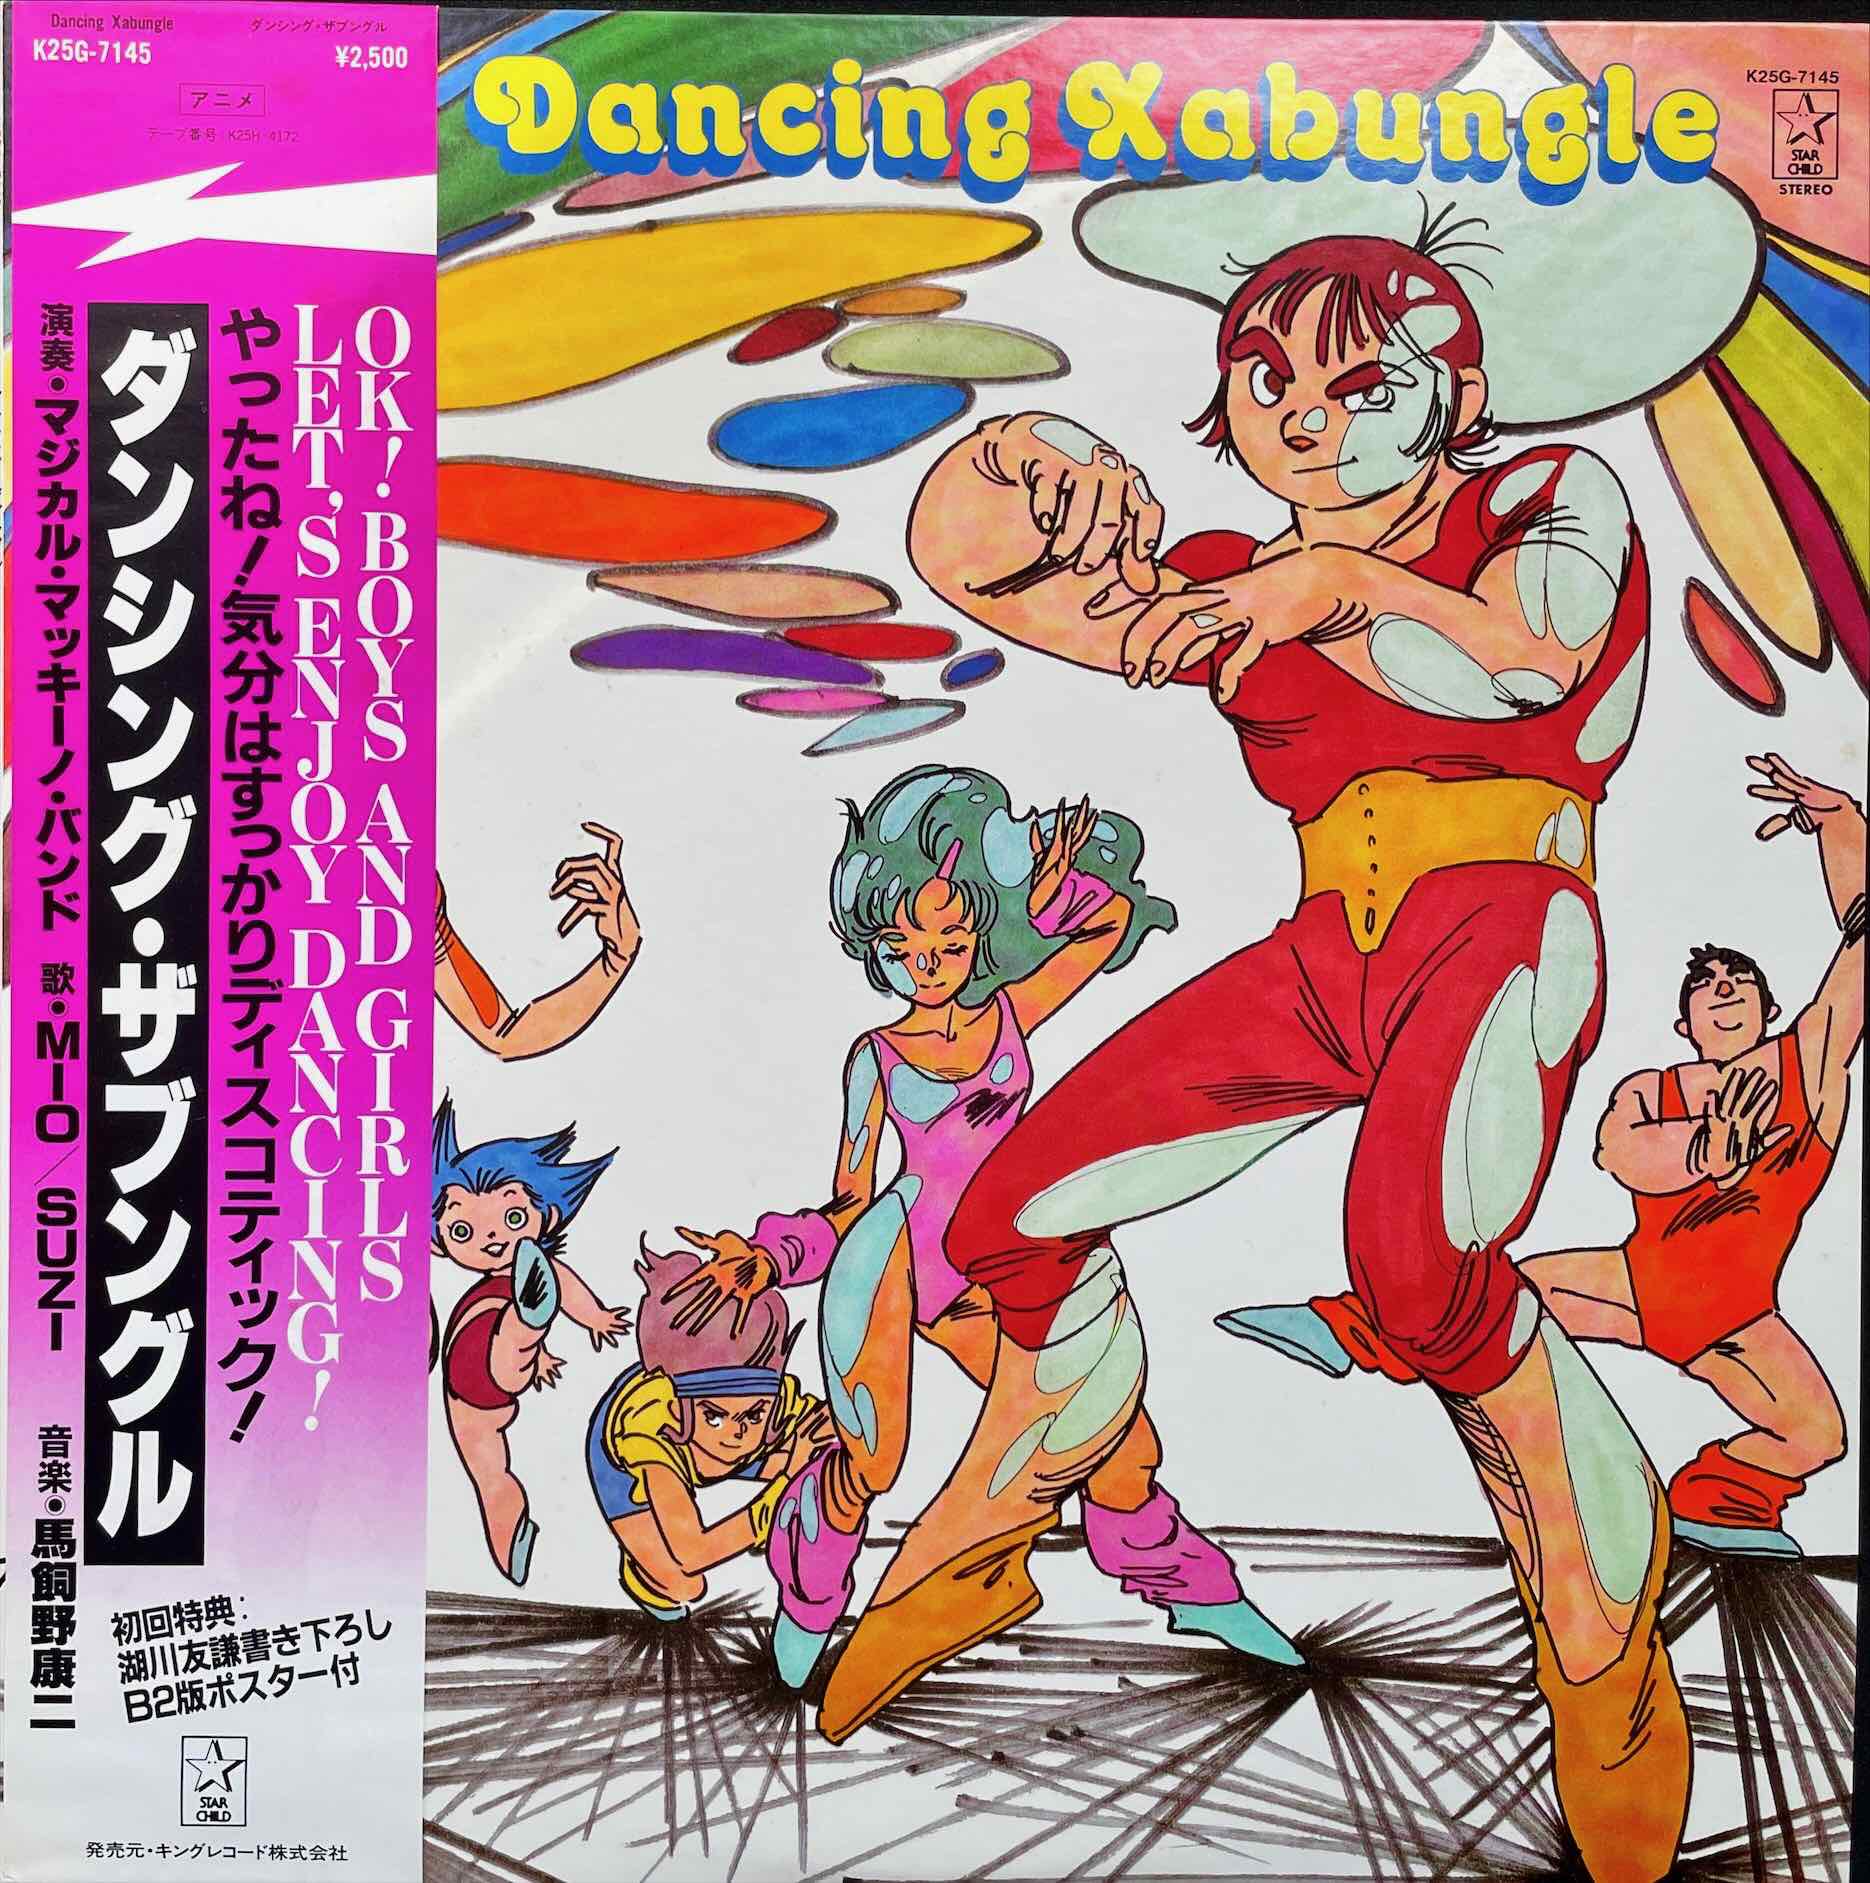 Khoji Makaino u003d 馬飼野康二 u200e– Dancing Xabungle u003d ダンシング・ザブングル LP 中古レコード – monads  records